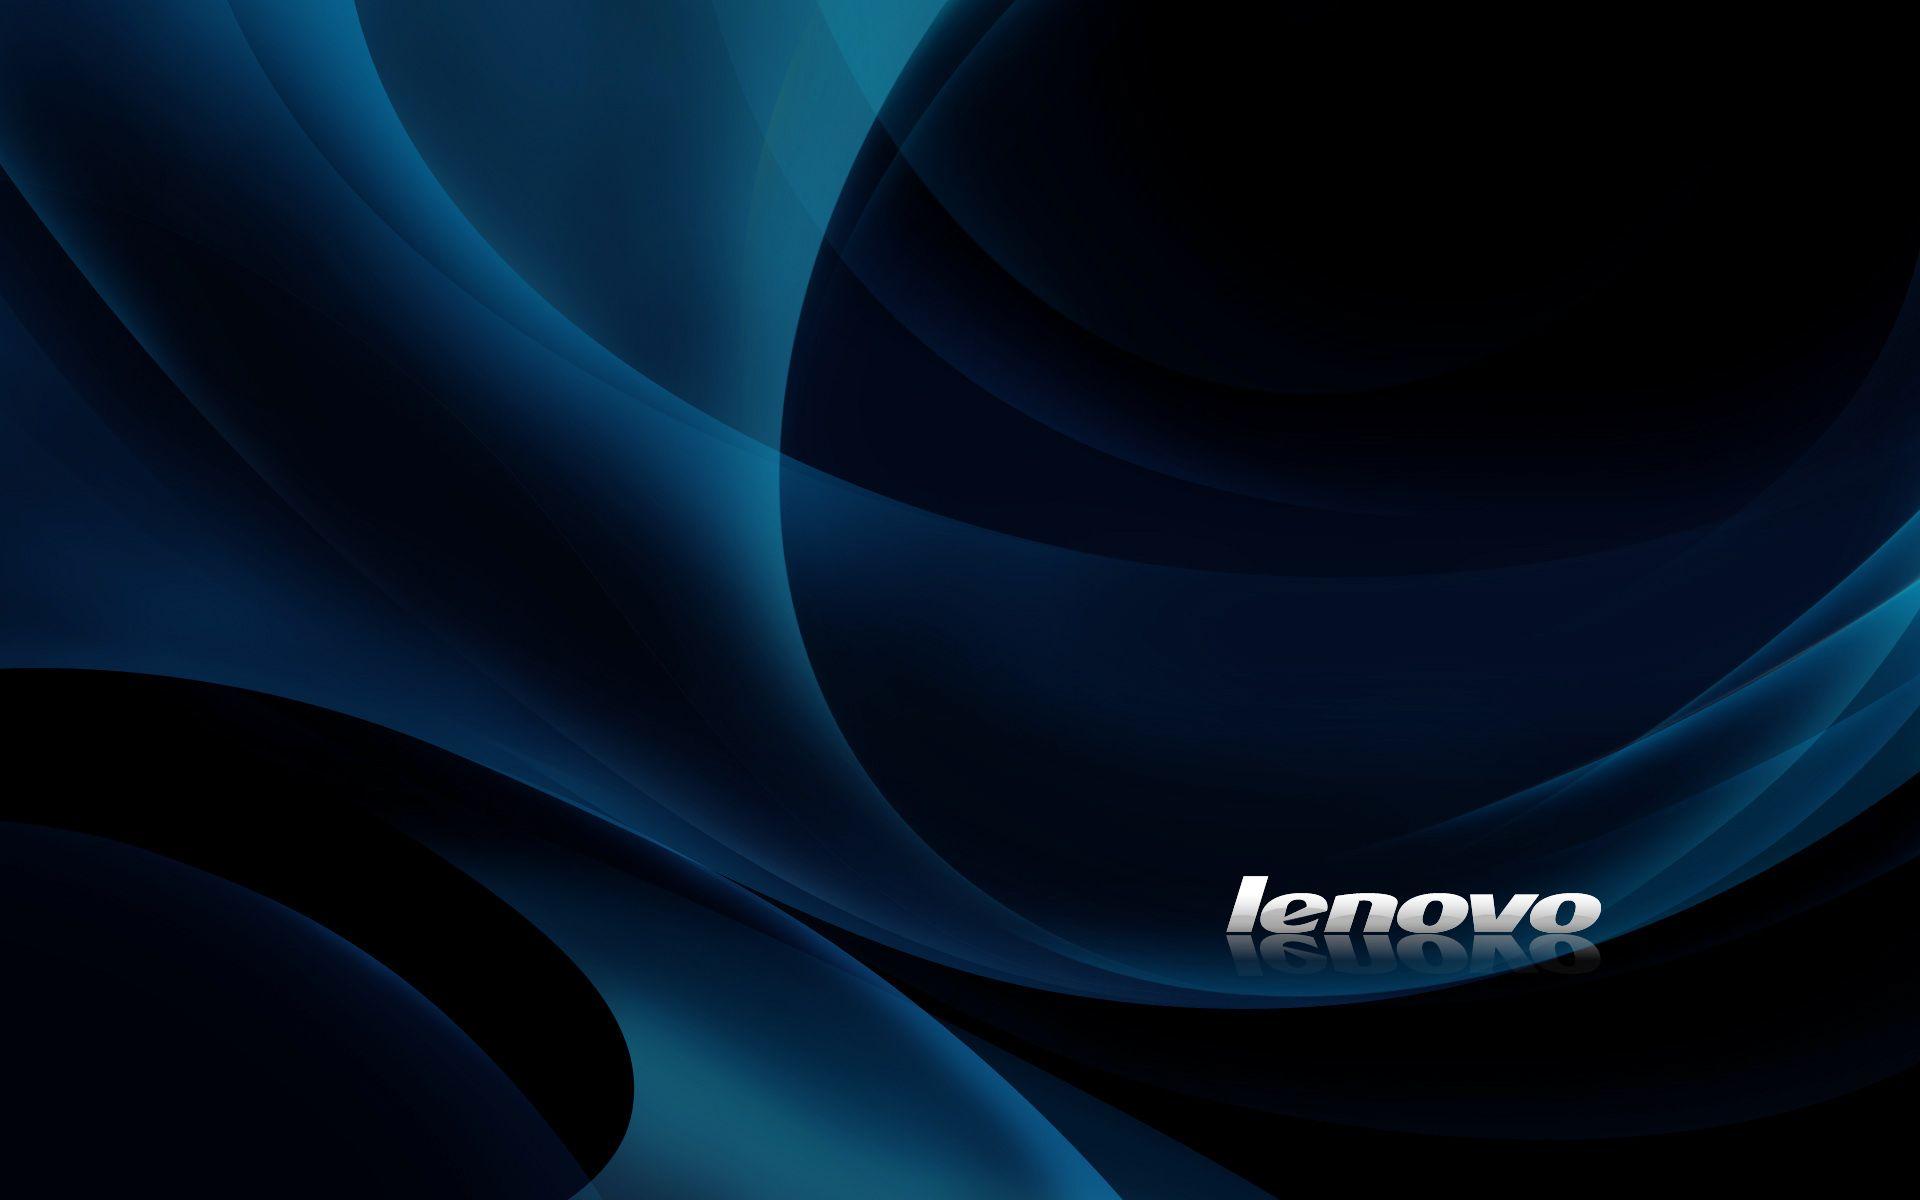 Lenovo Desktop Theme and Wallpaper for Windows 8